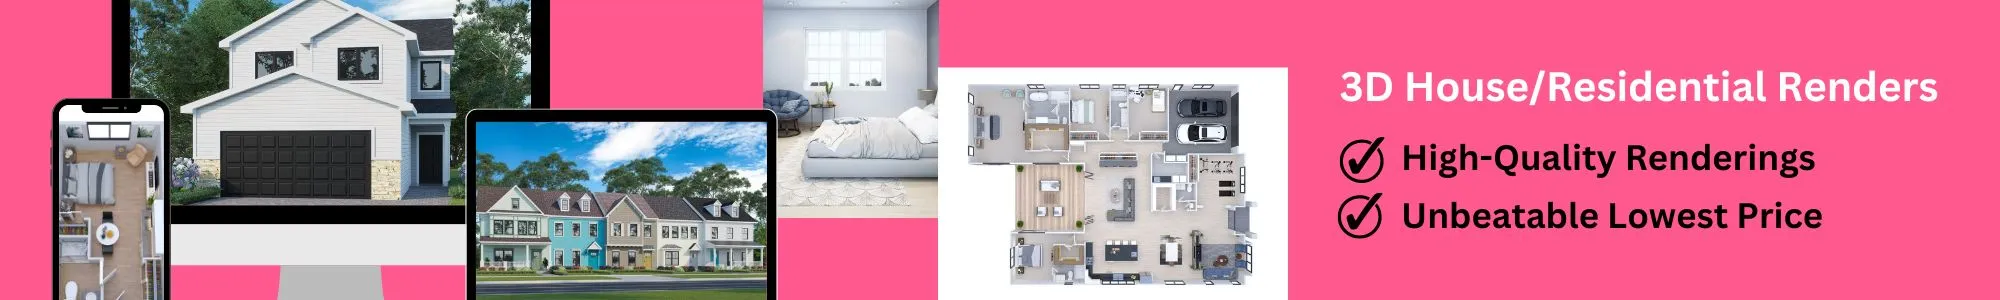 3D-House-Rendering-Services-Residential-Renders